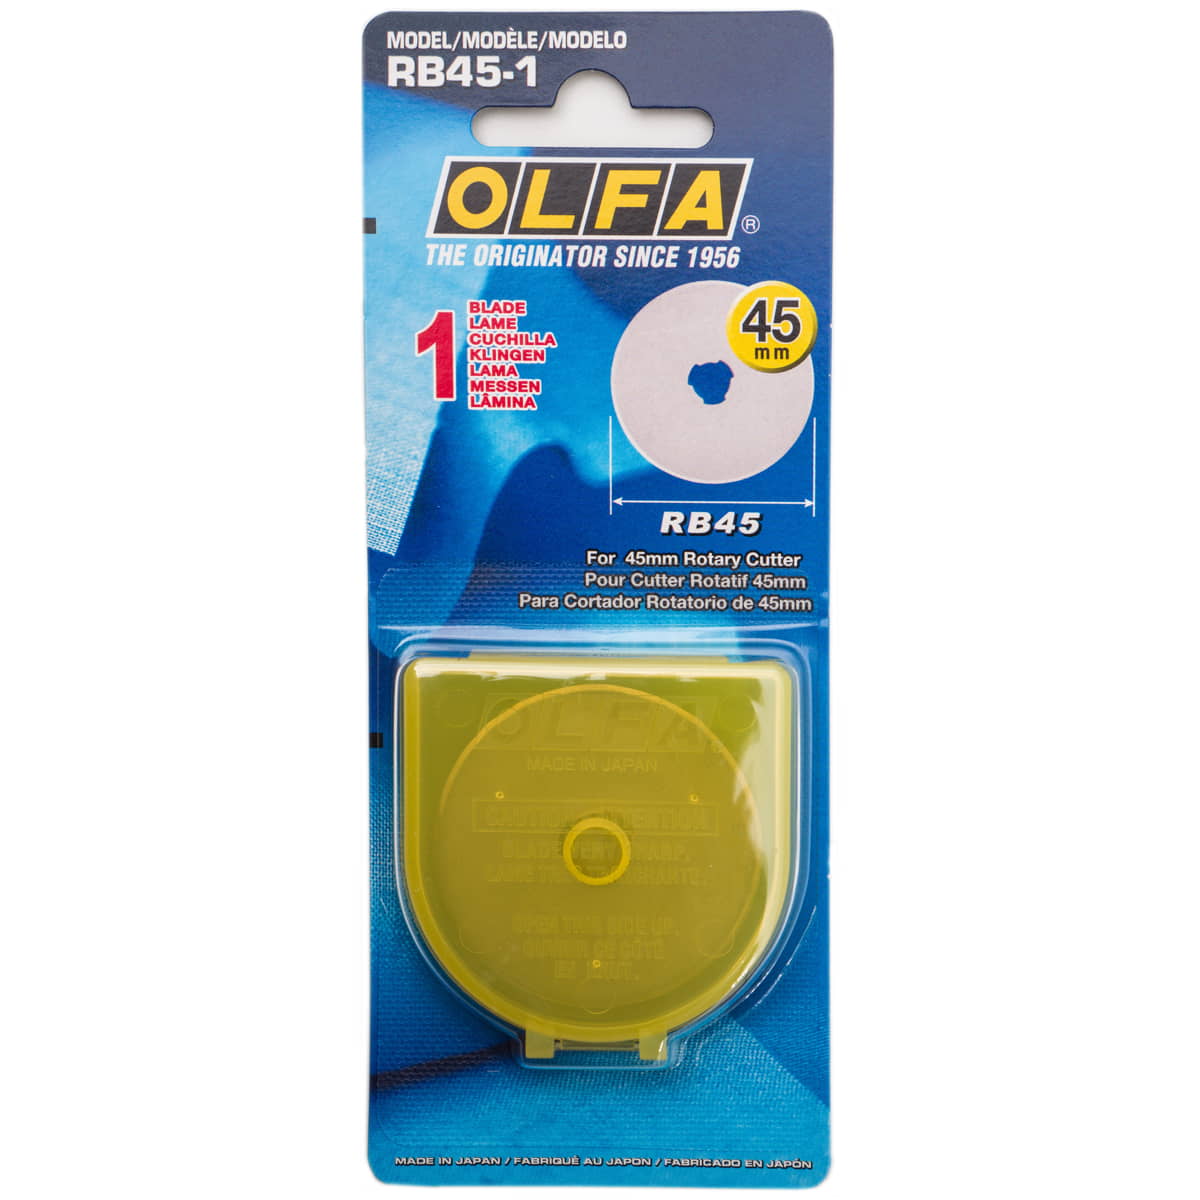 Olfa RB45-1 reserve rolmes Rolmes OLFA-RB45-1 091511500424